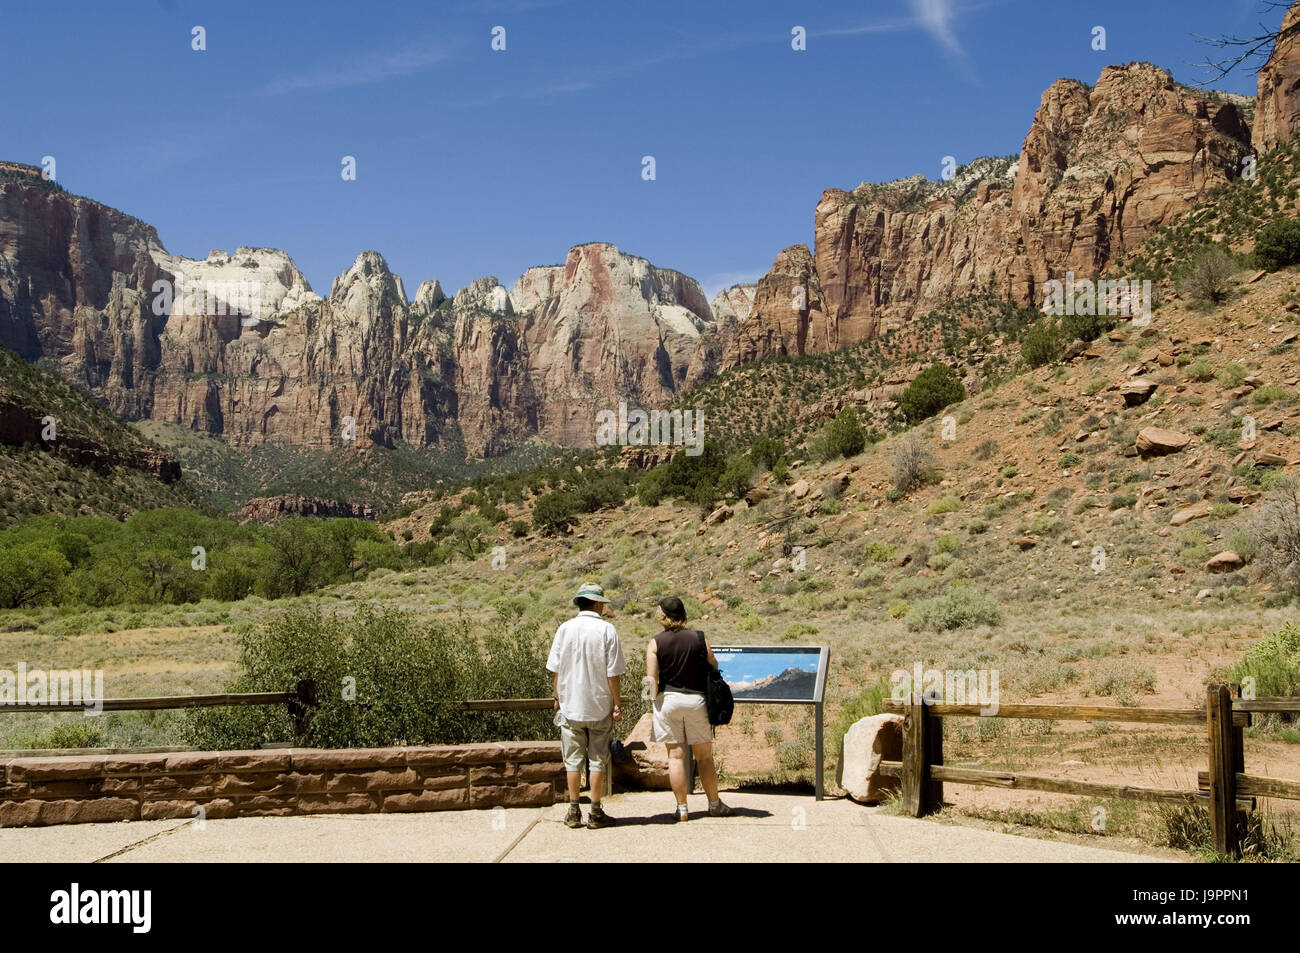 The USA,Utah,Zion national park,tourist,information board, Stock Photo